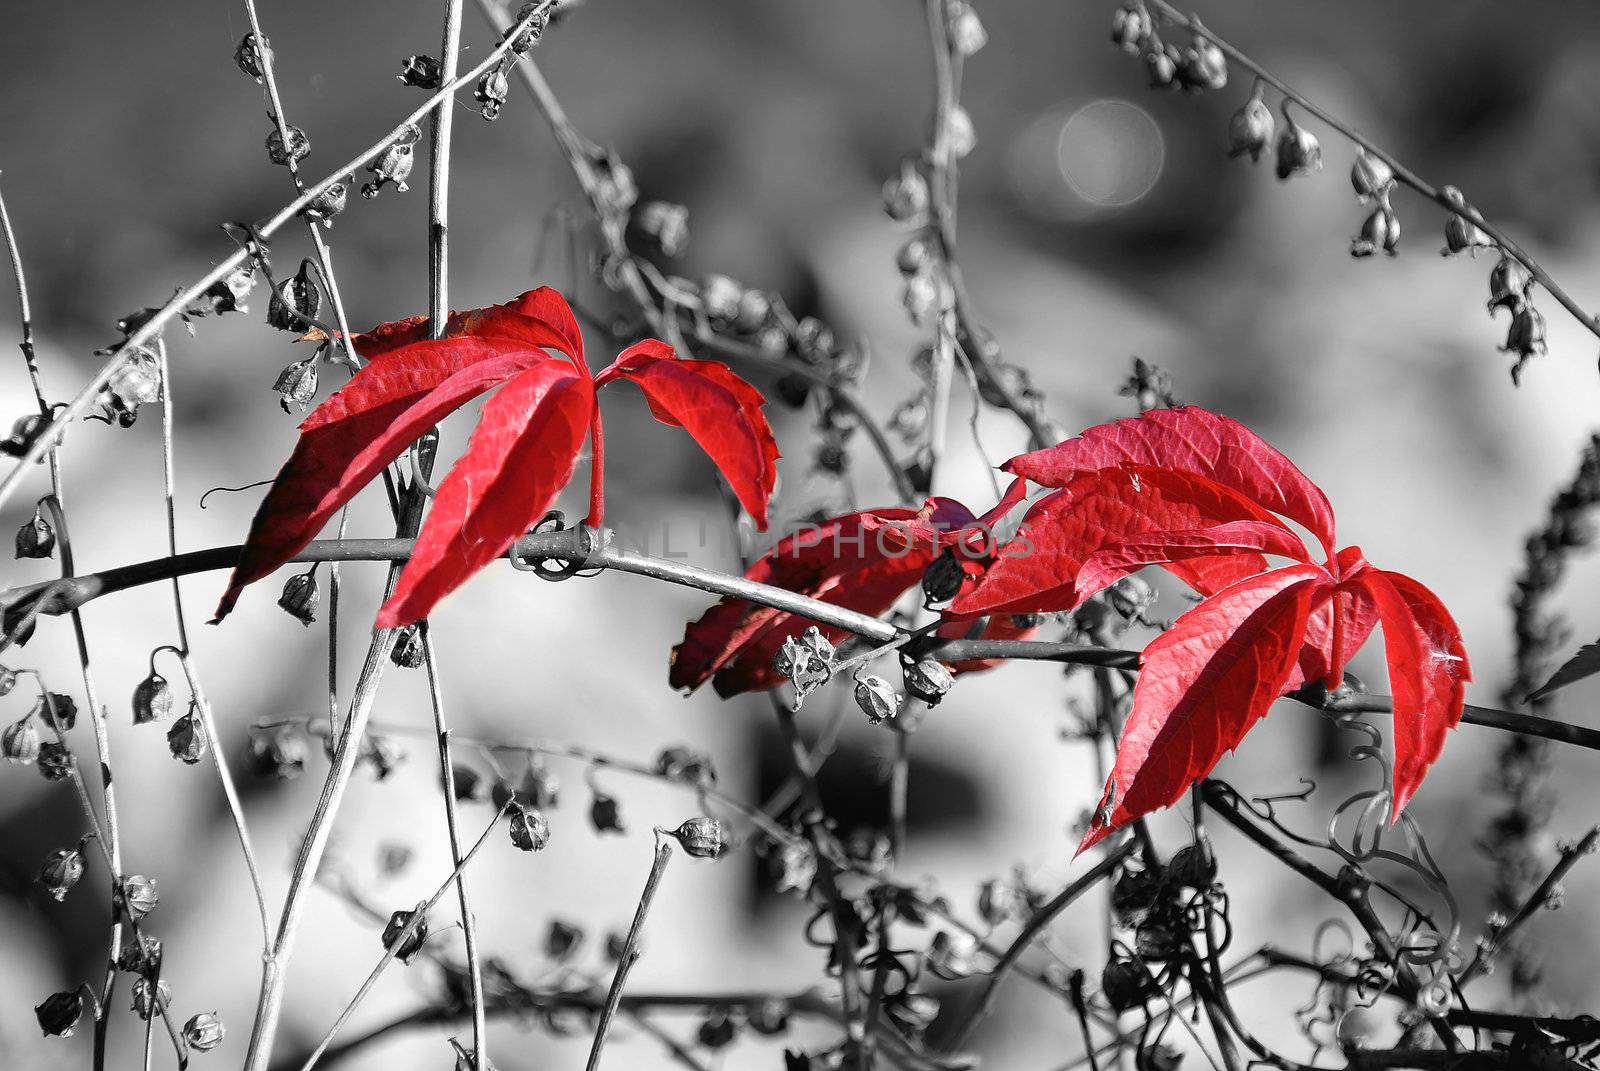 Red leaves on grey dry vegetation background